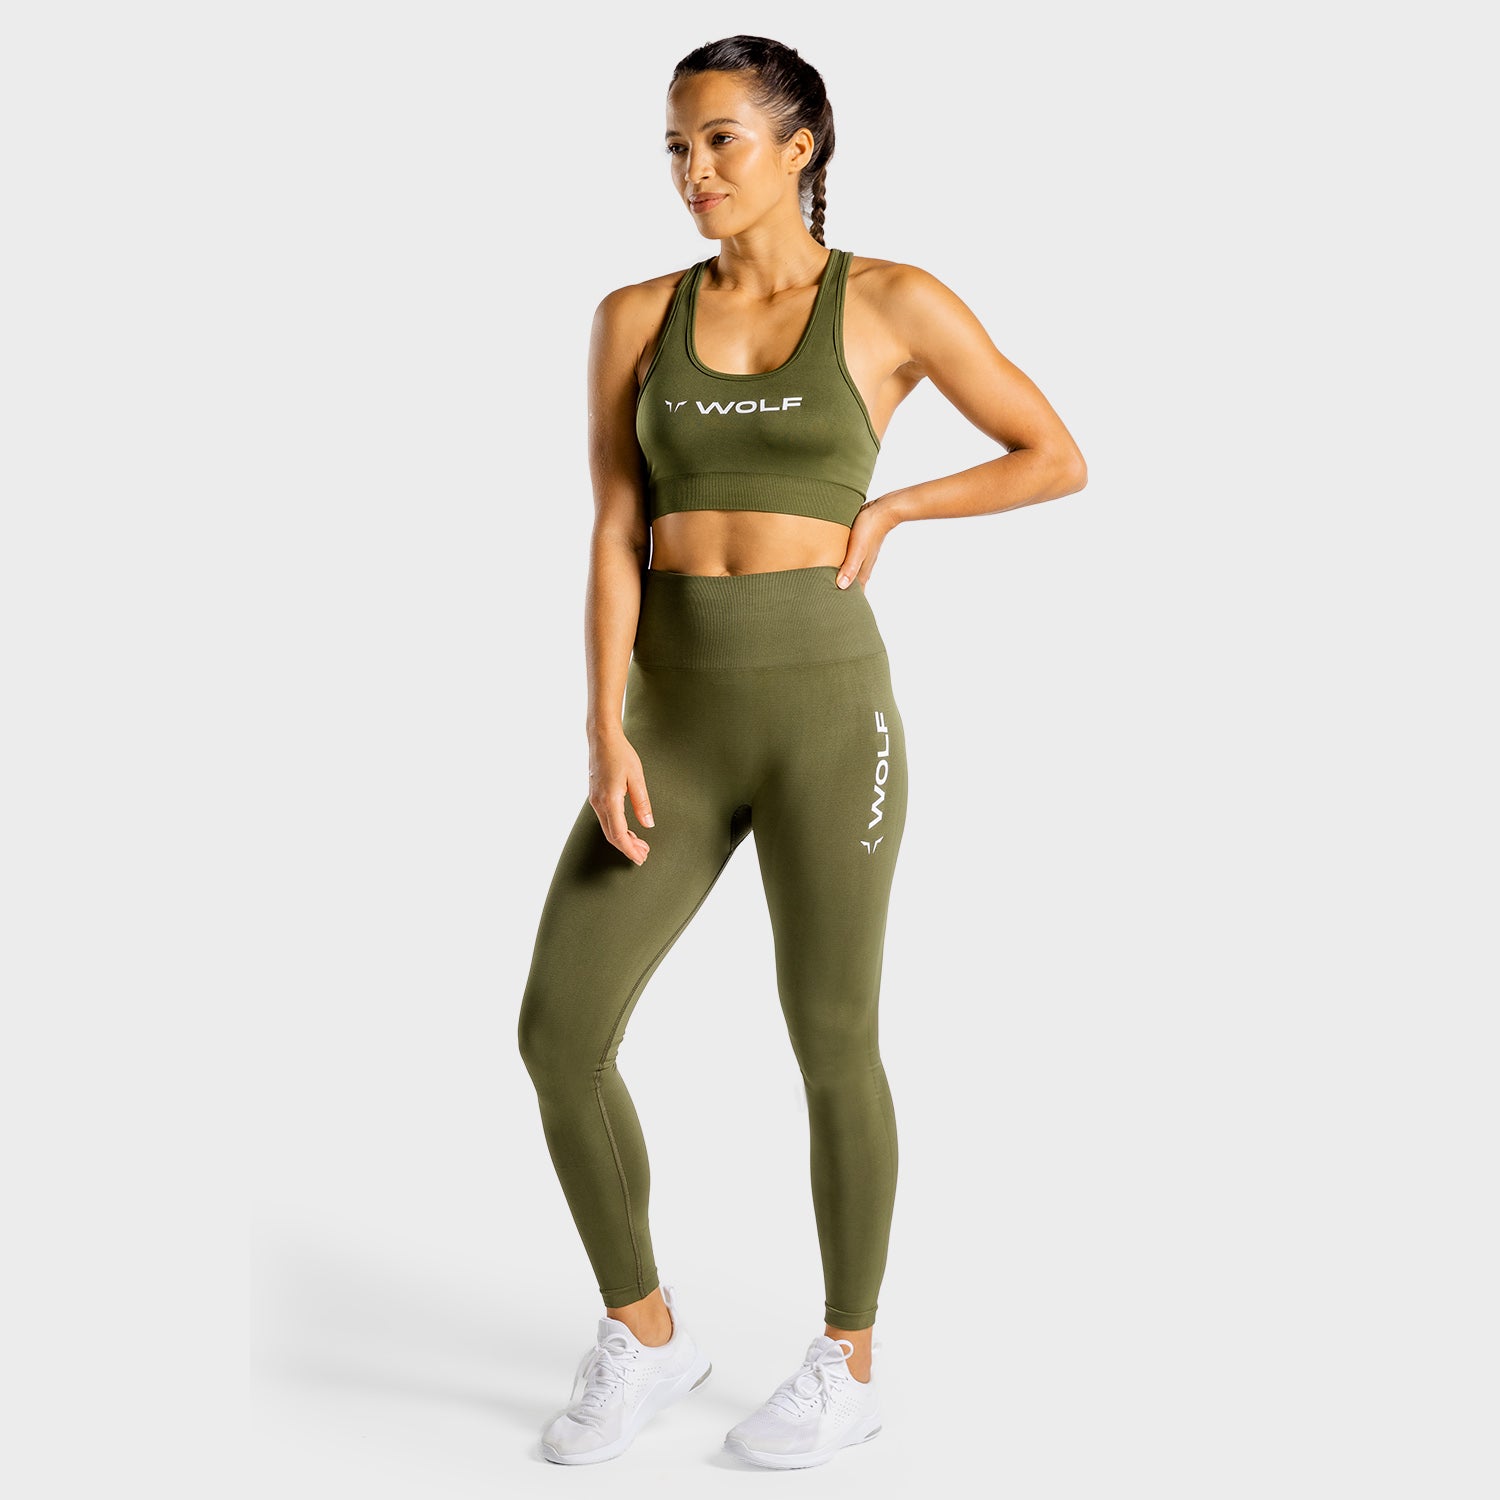 squatwolf-gym-leggings-for-women-primal-leggings-khaki-workout-clothes